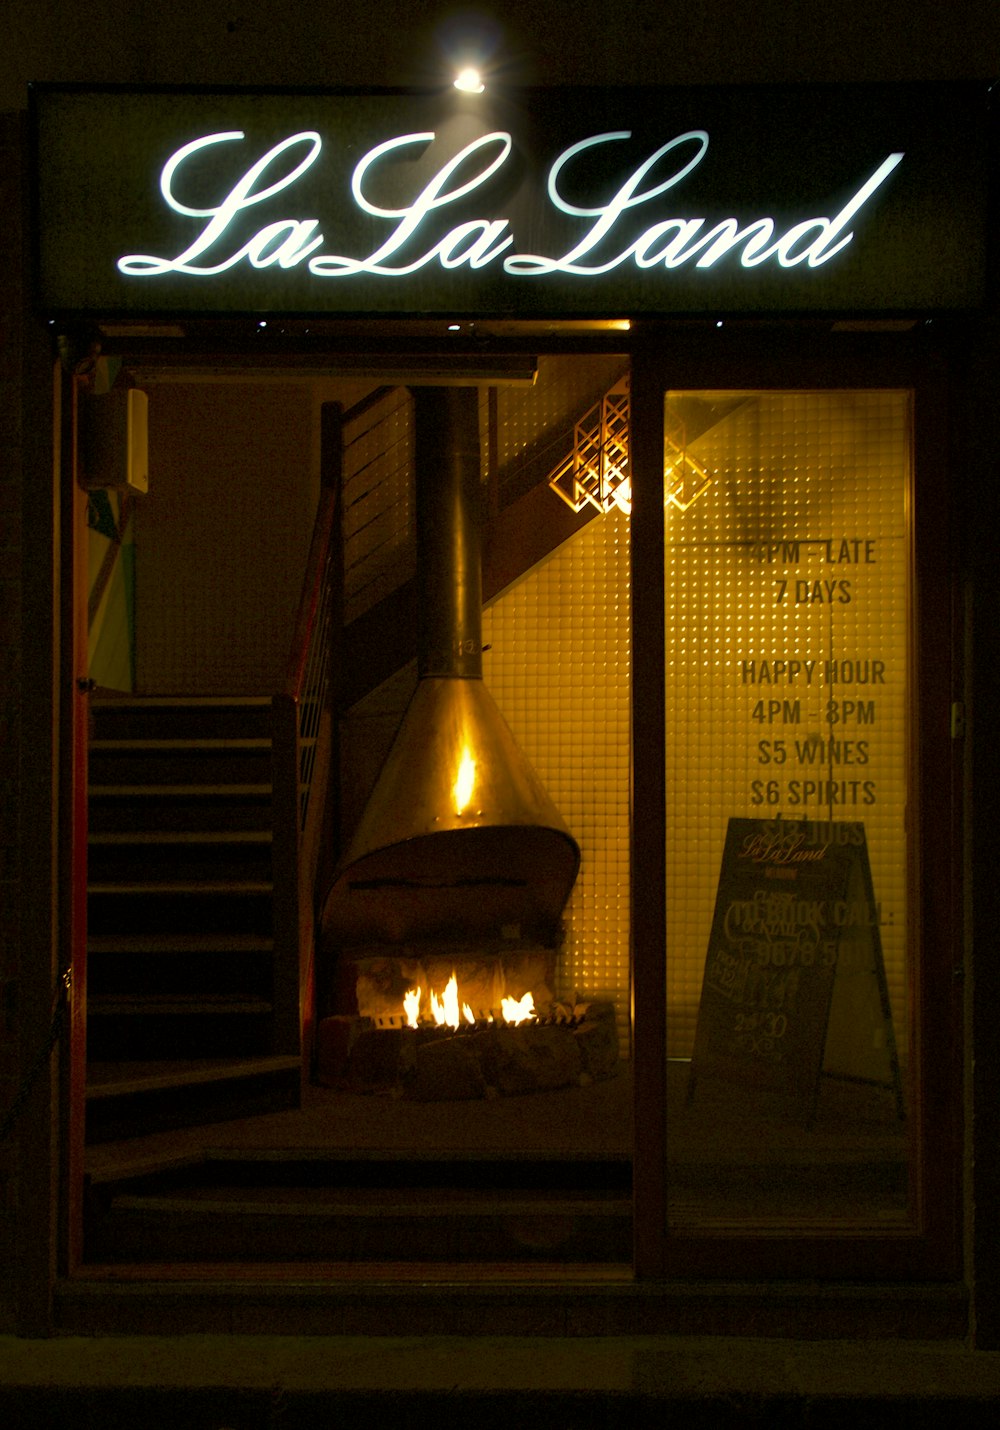 La La Land signage